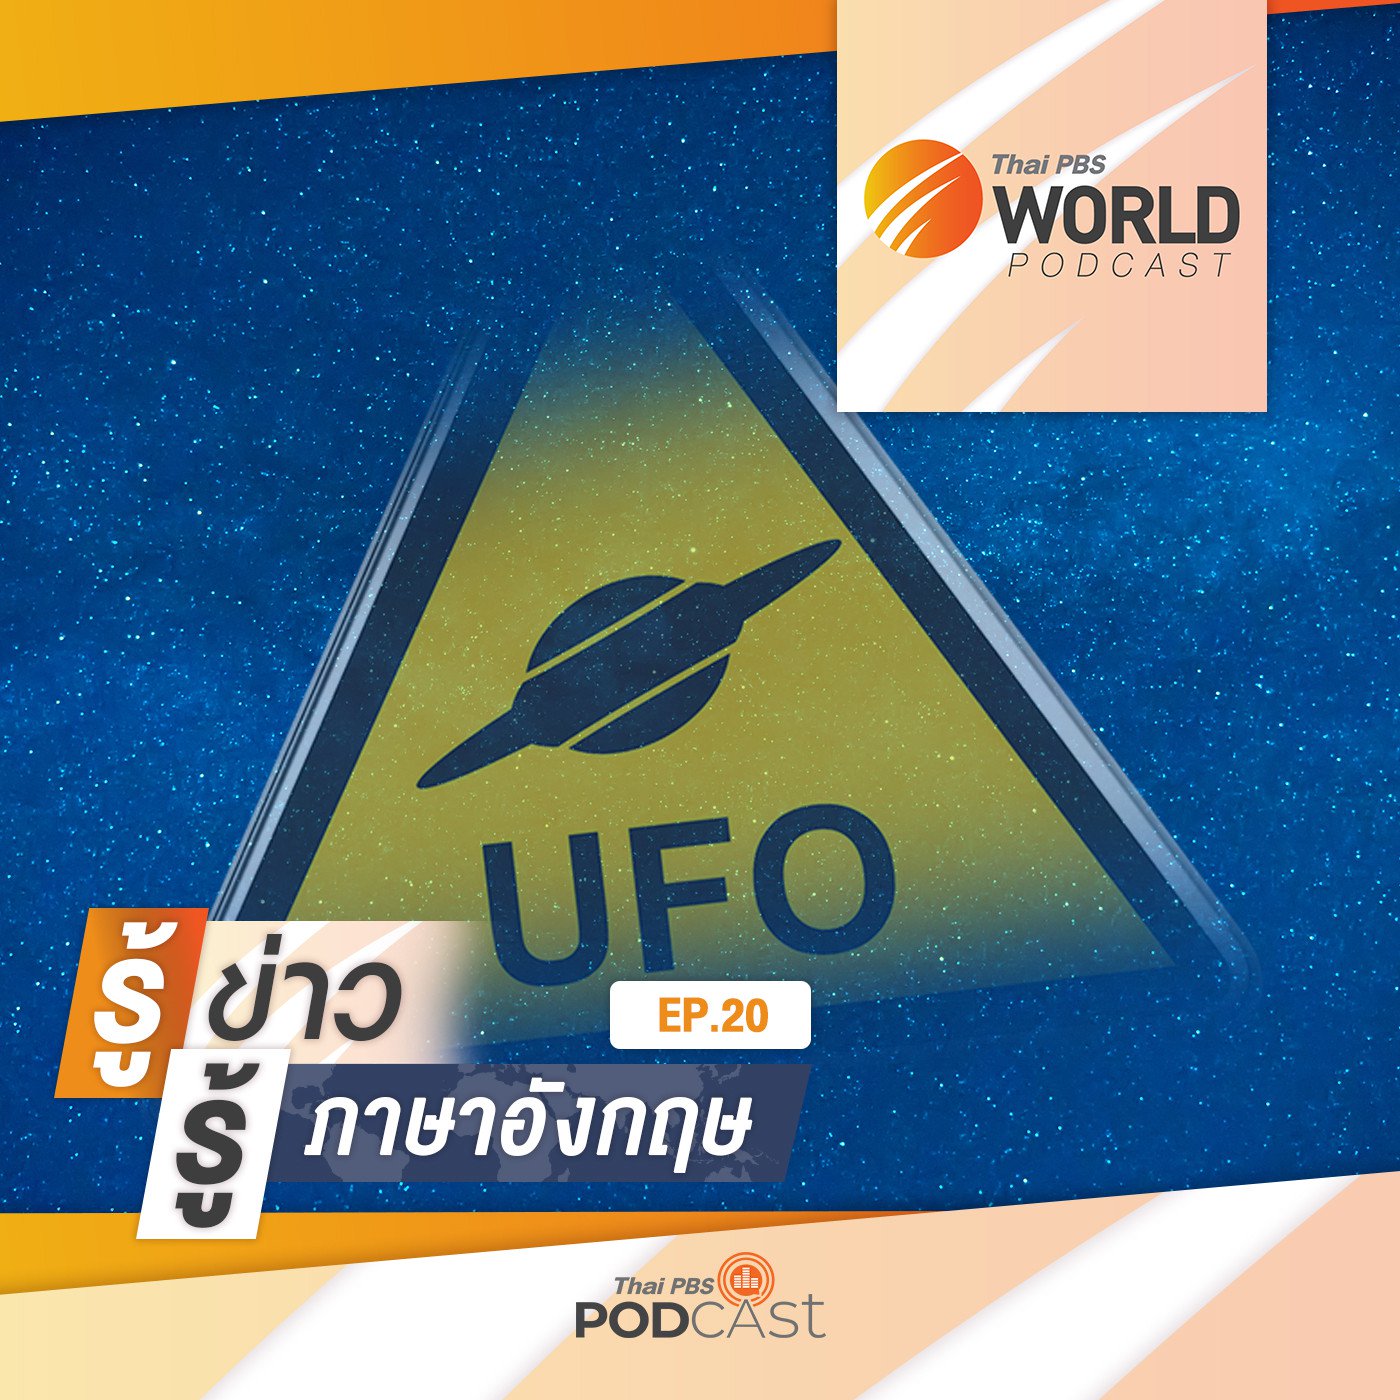 Thai PBS World Podcast - รู้ข่าว รู้ภาษาอังกฤษ EP. 20: รู้ข่าว รู้ภาษาอังกฤษ - ชาวนิวยอร์กหั�